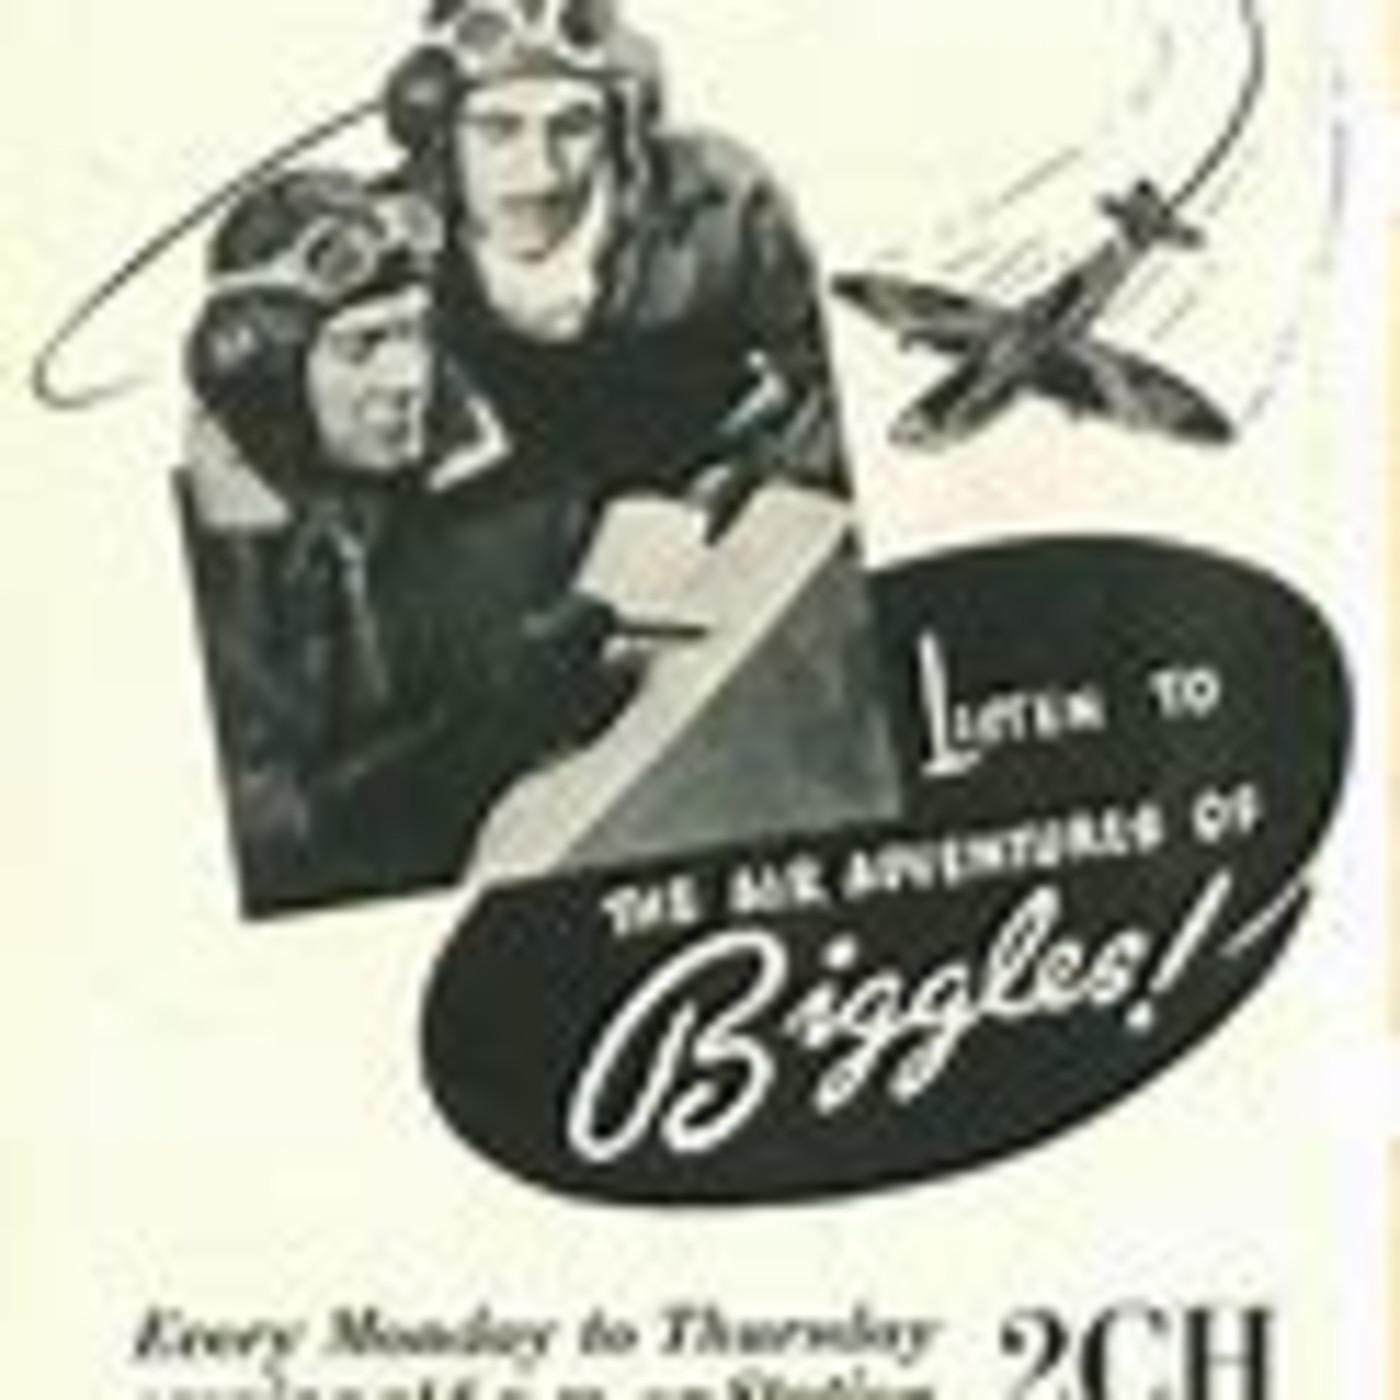 Air Adventures of Biggles xx-xx-xx International Brigade (20)